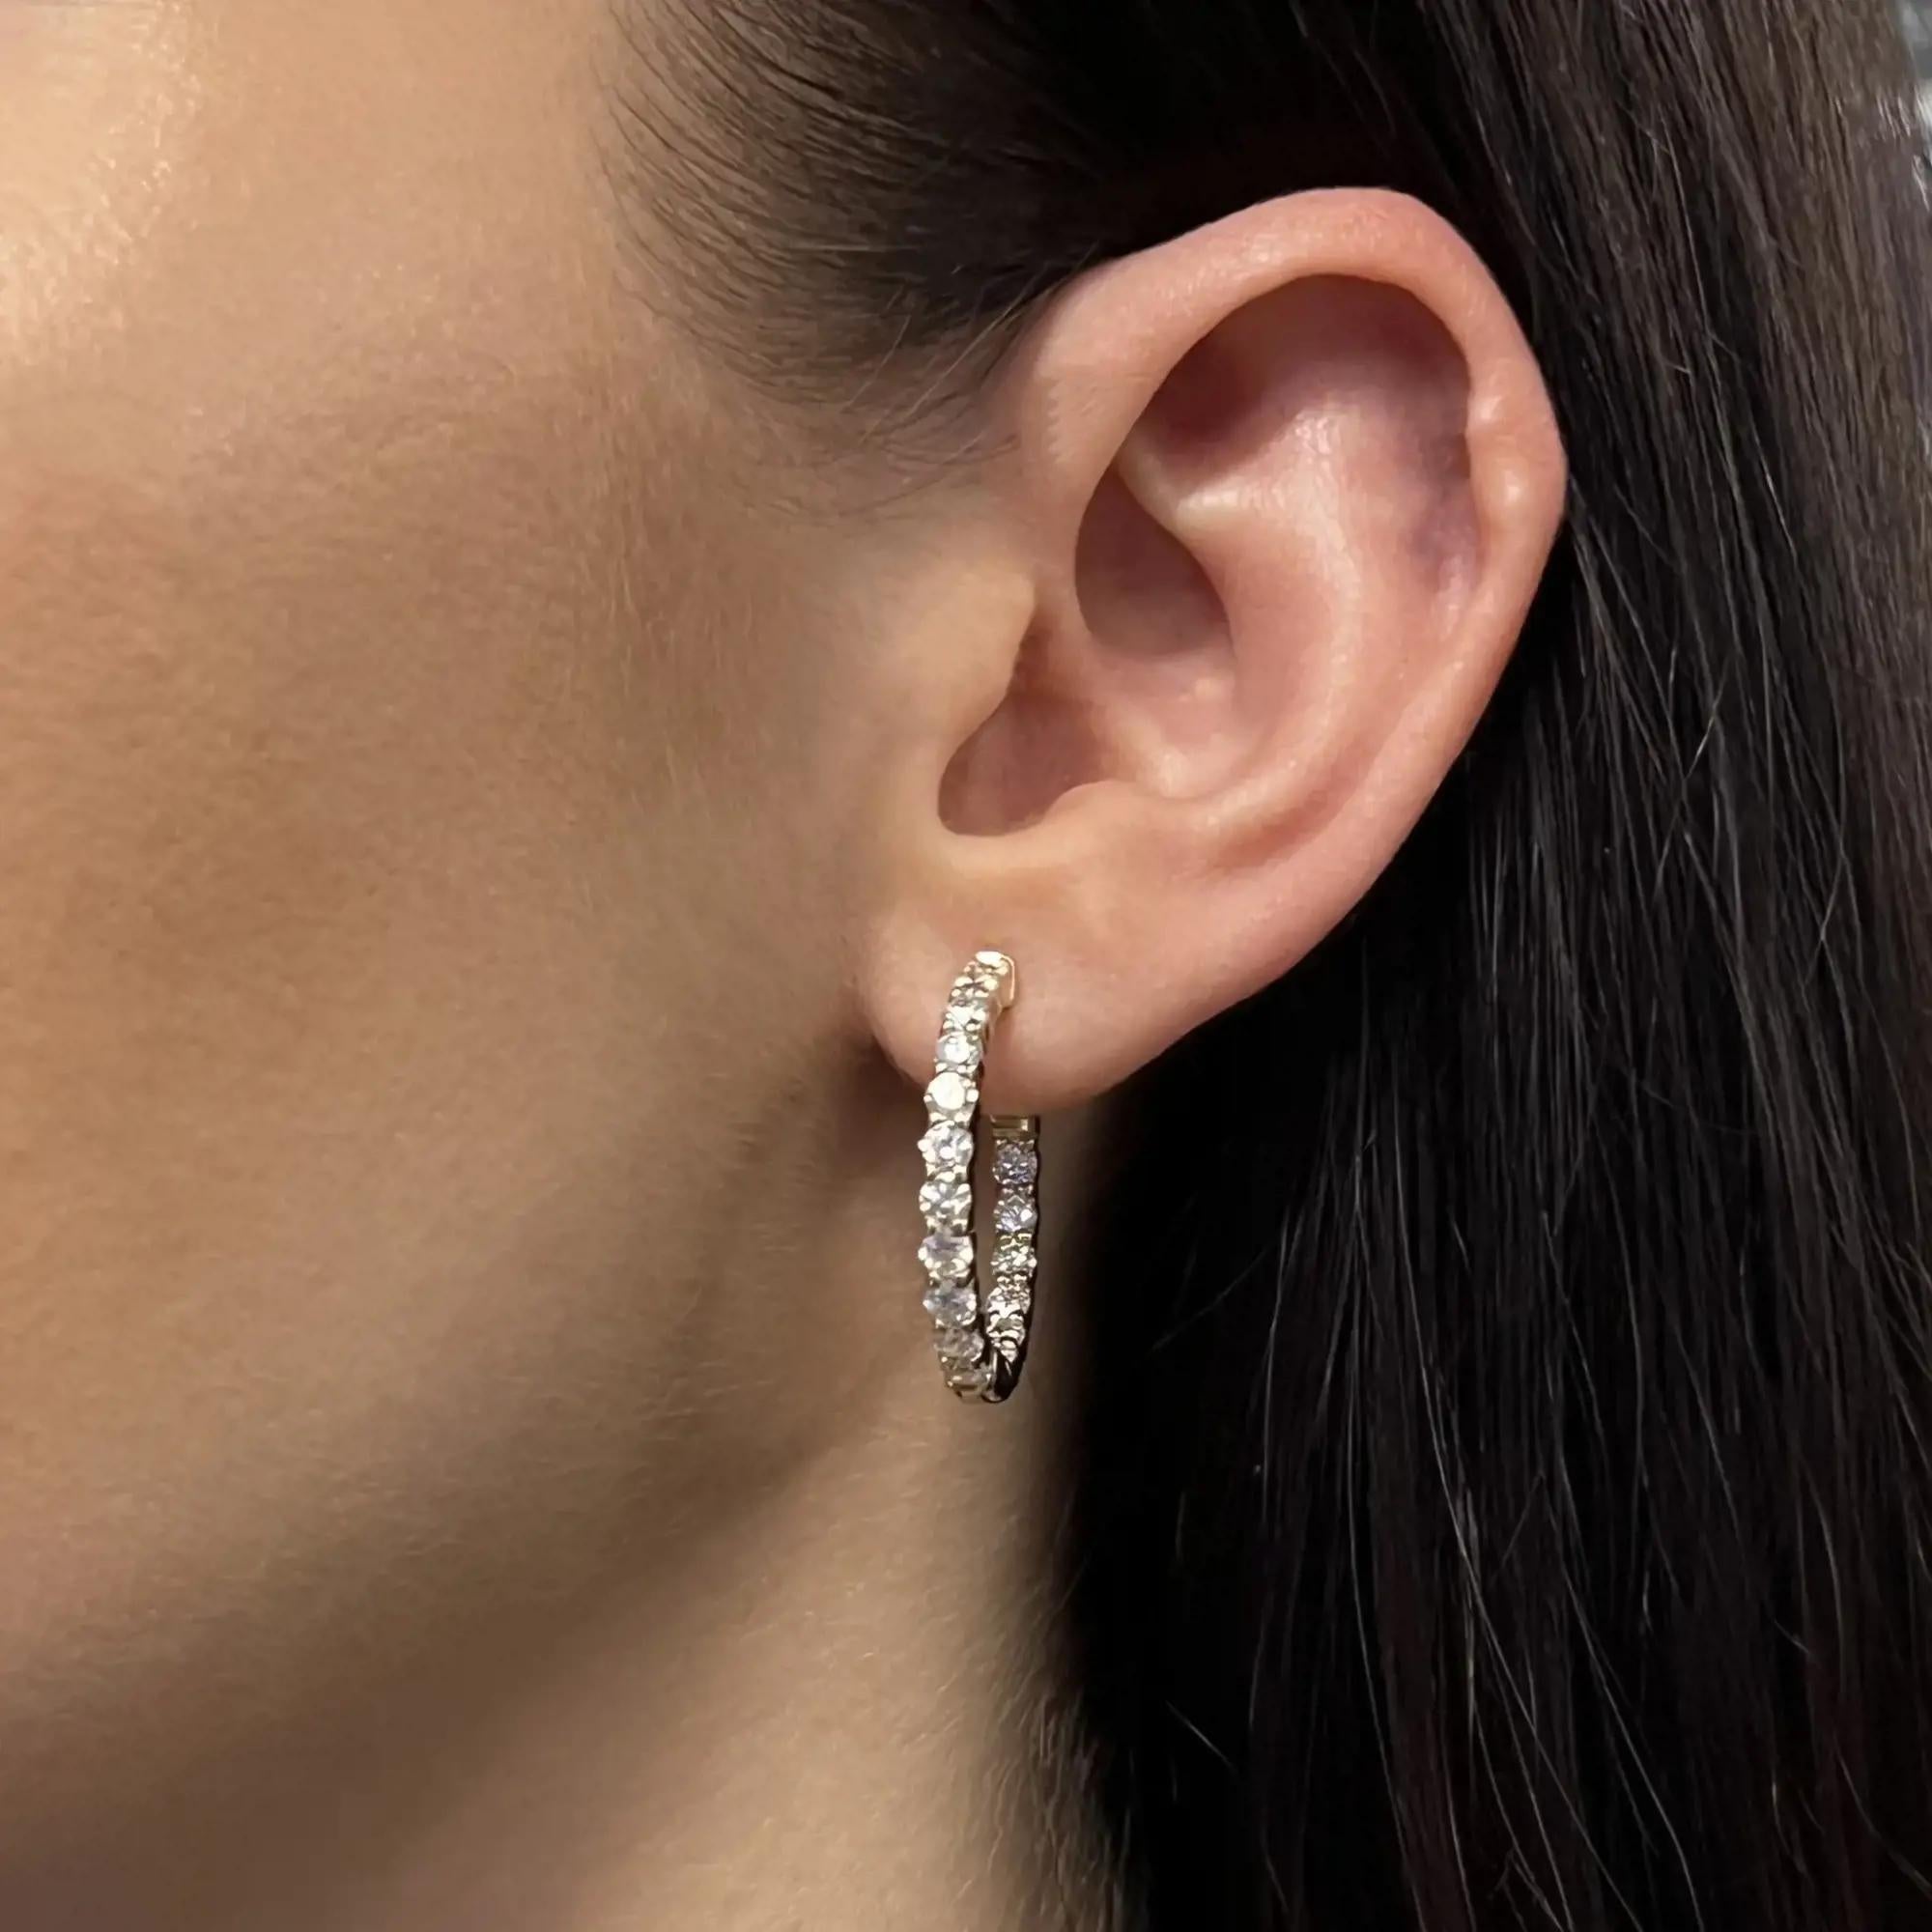 Rachel Koen Inside Out Diamond Hoop Earrings 14K White Gold 4.91Cttw In New Condition For Sale In New York, NY